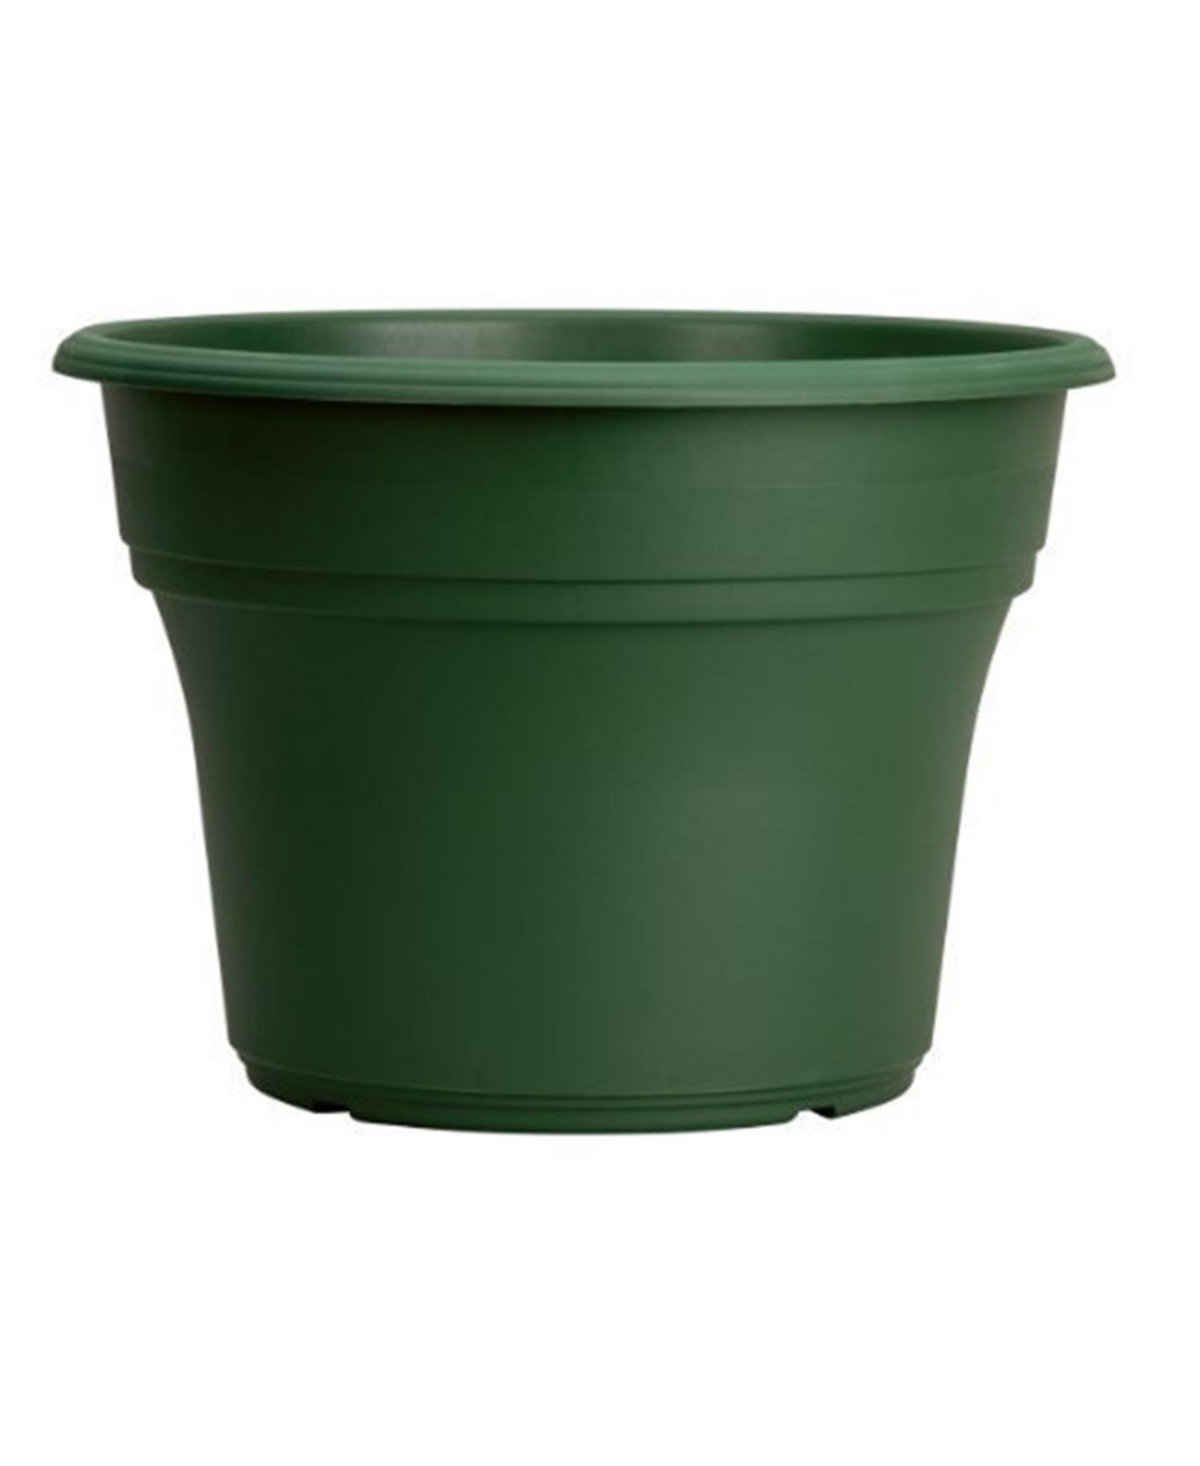 Hc Companies Panterra Round Planter Plastic Pot Outdoor Plants 10in - Green